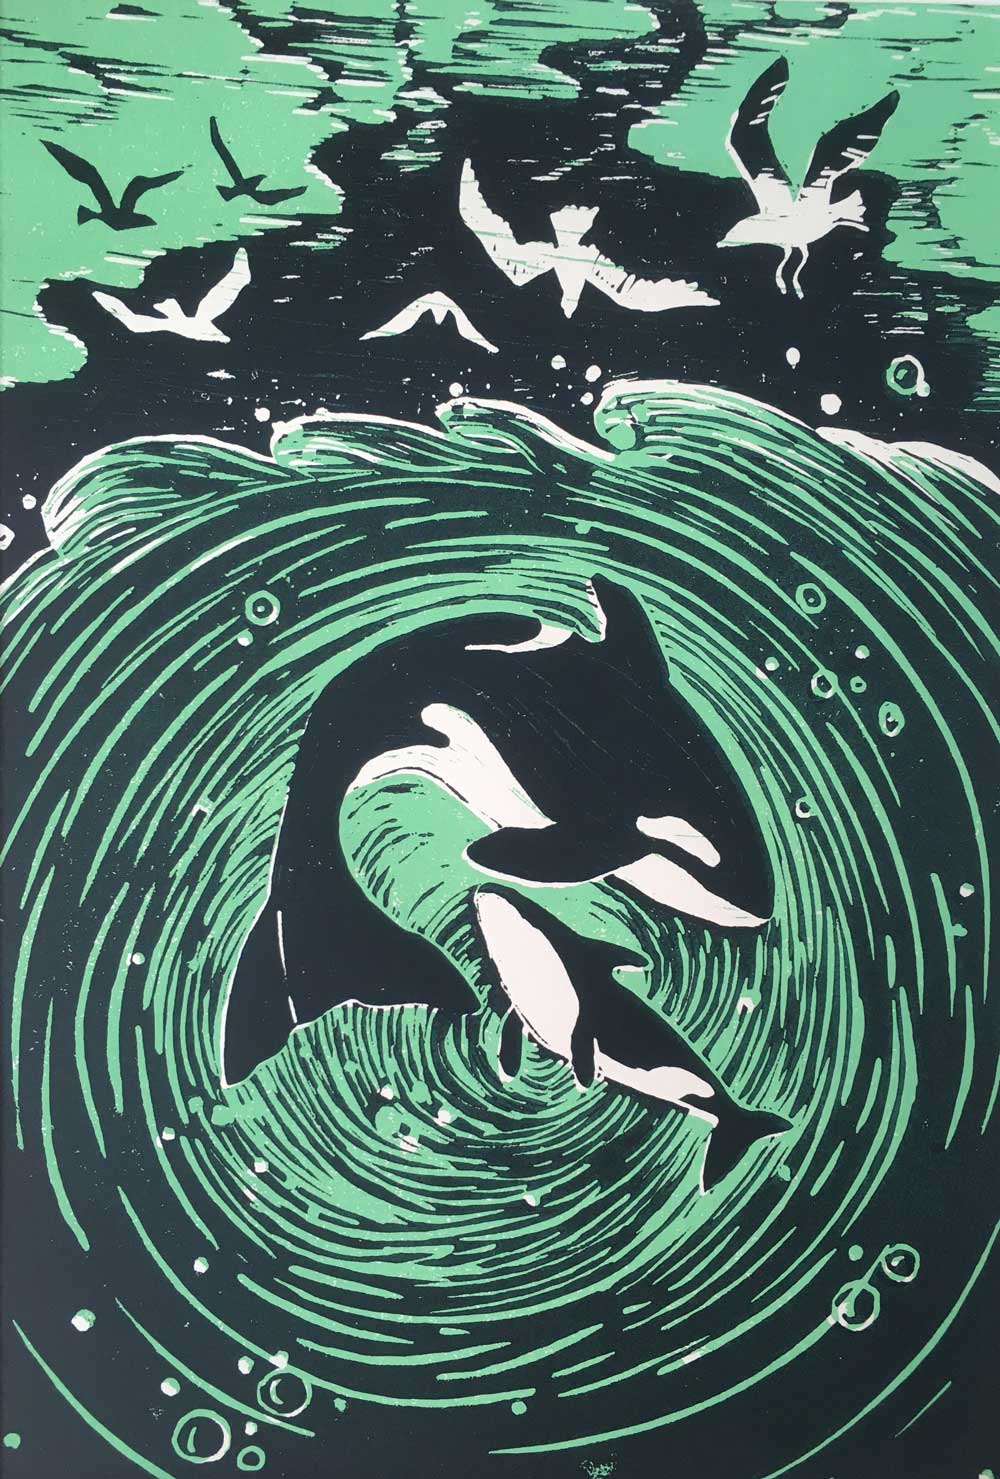 Orcas by Josie Tipler